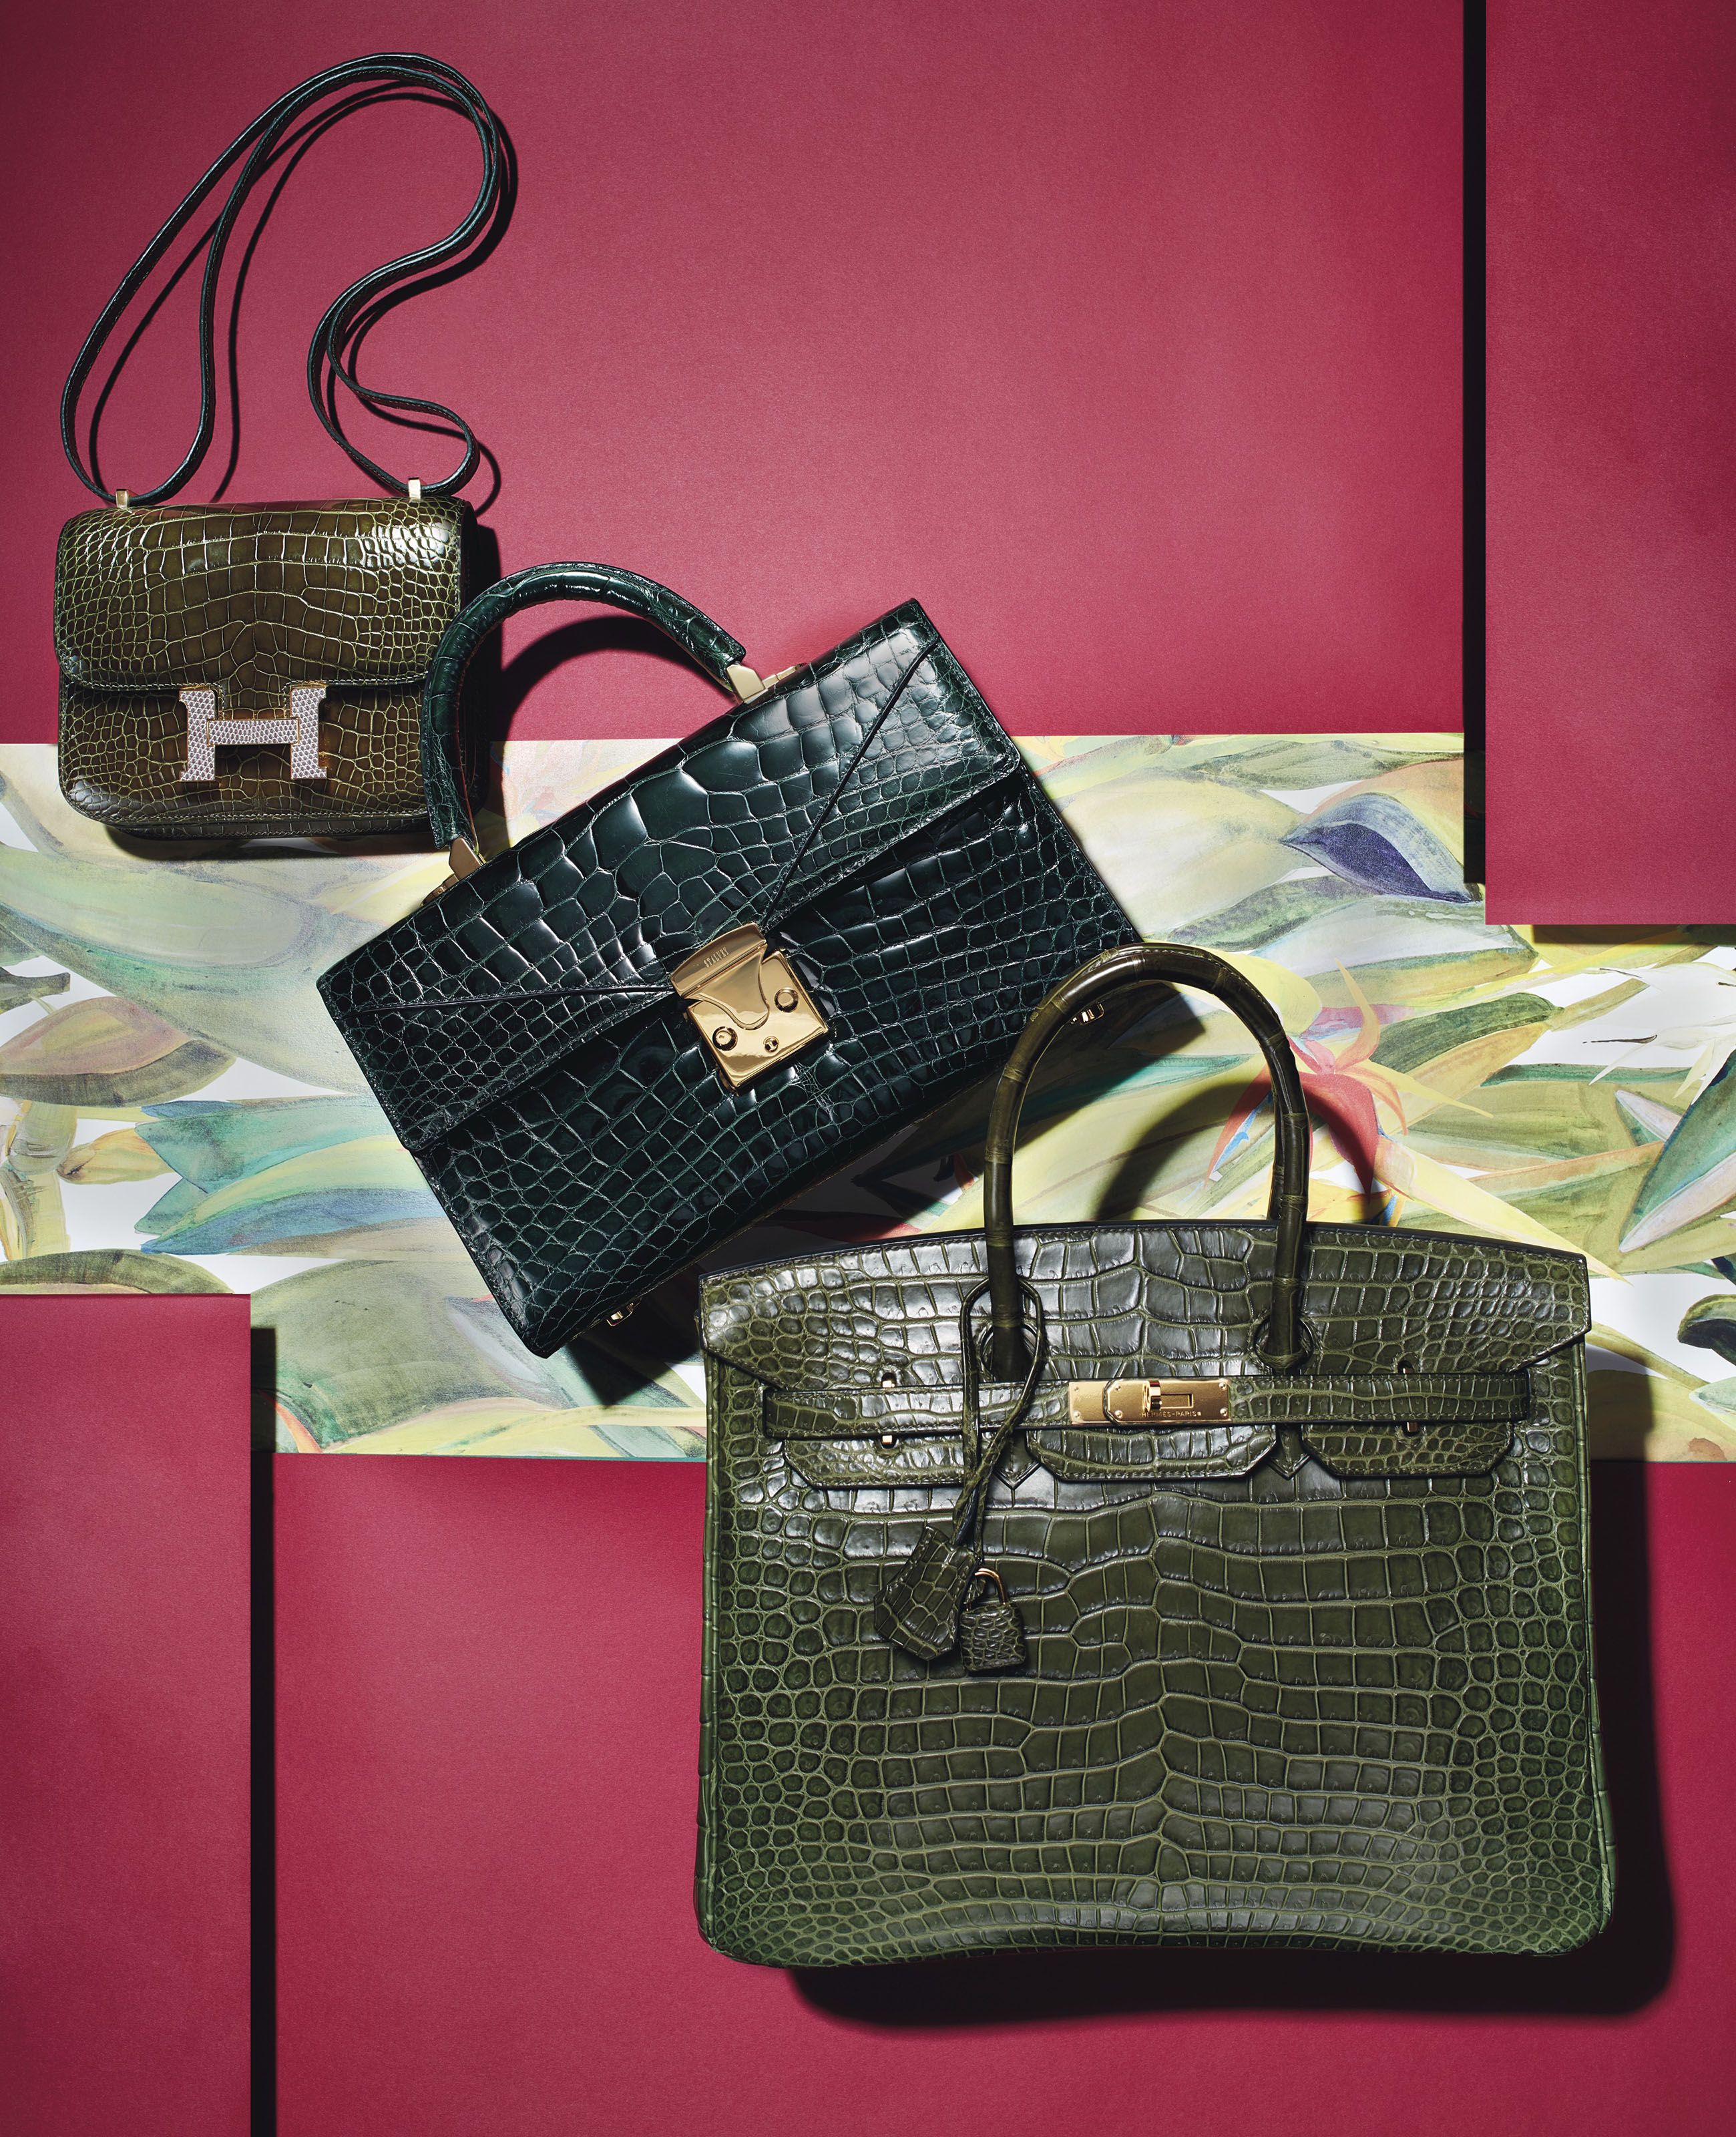 Hermès Birkin bag sells for record £146,000 at Christie's auction, Handbags